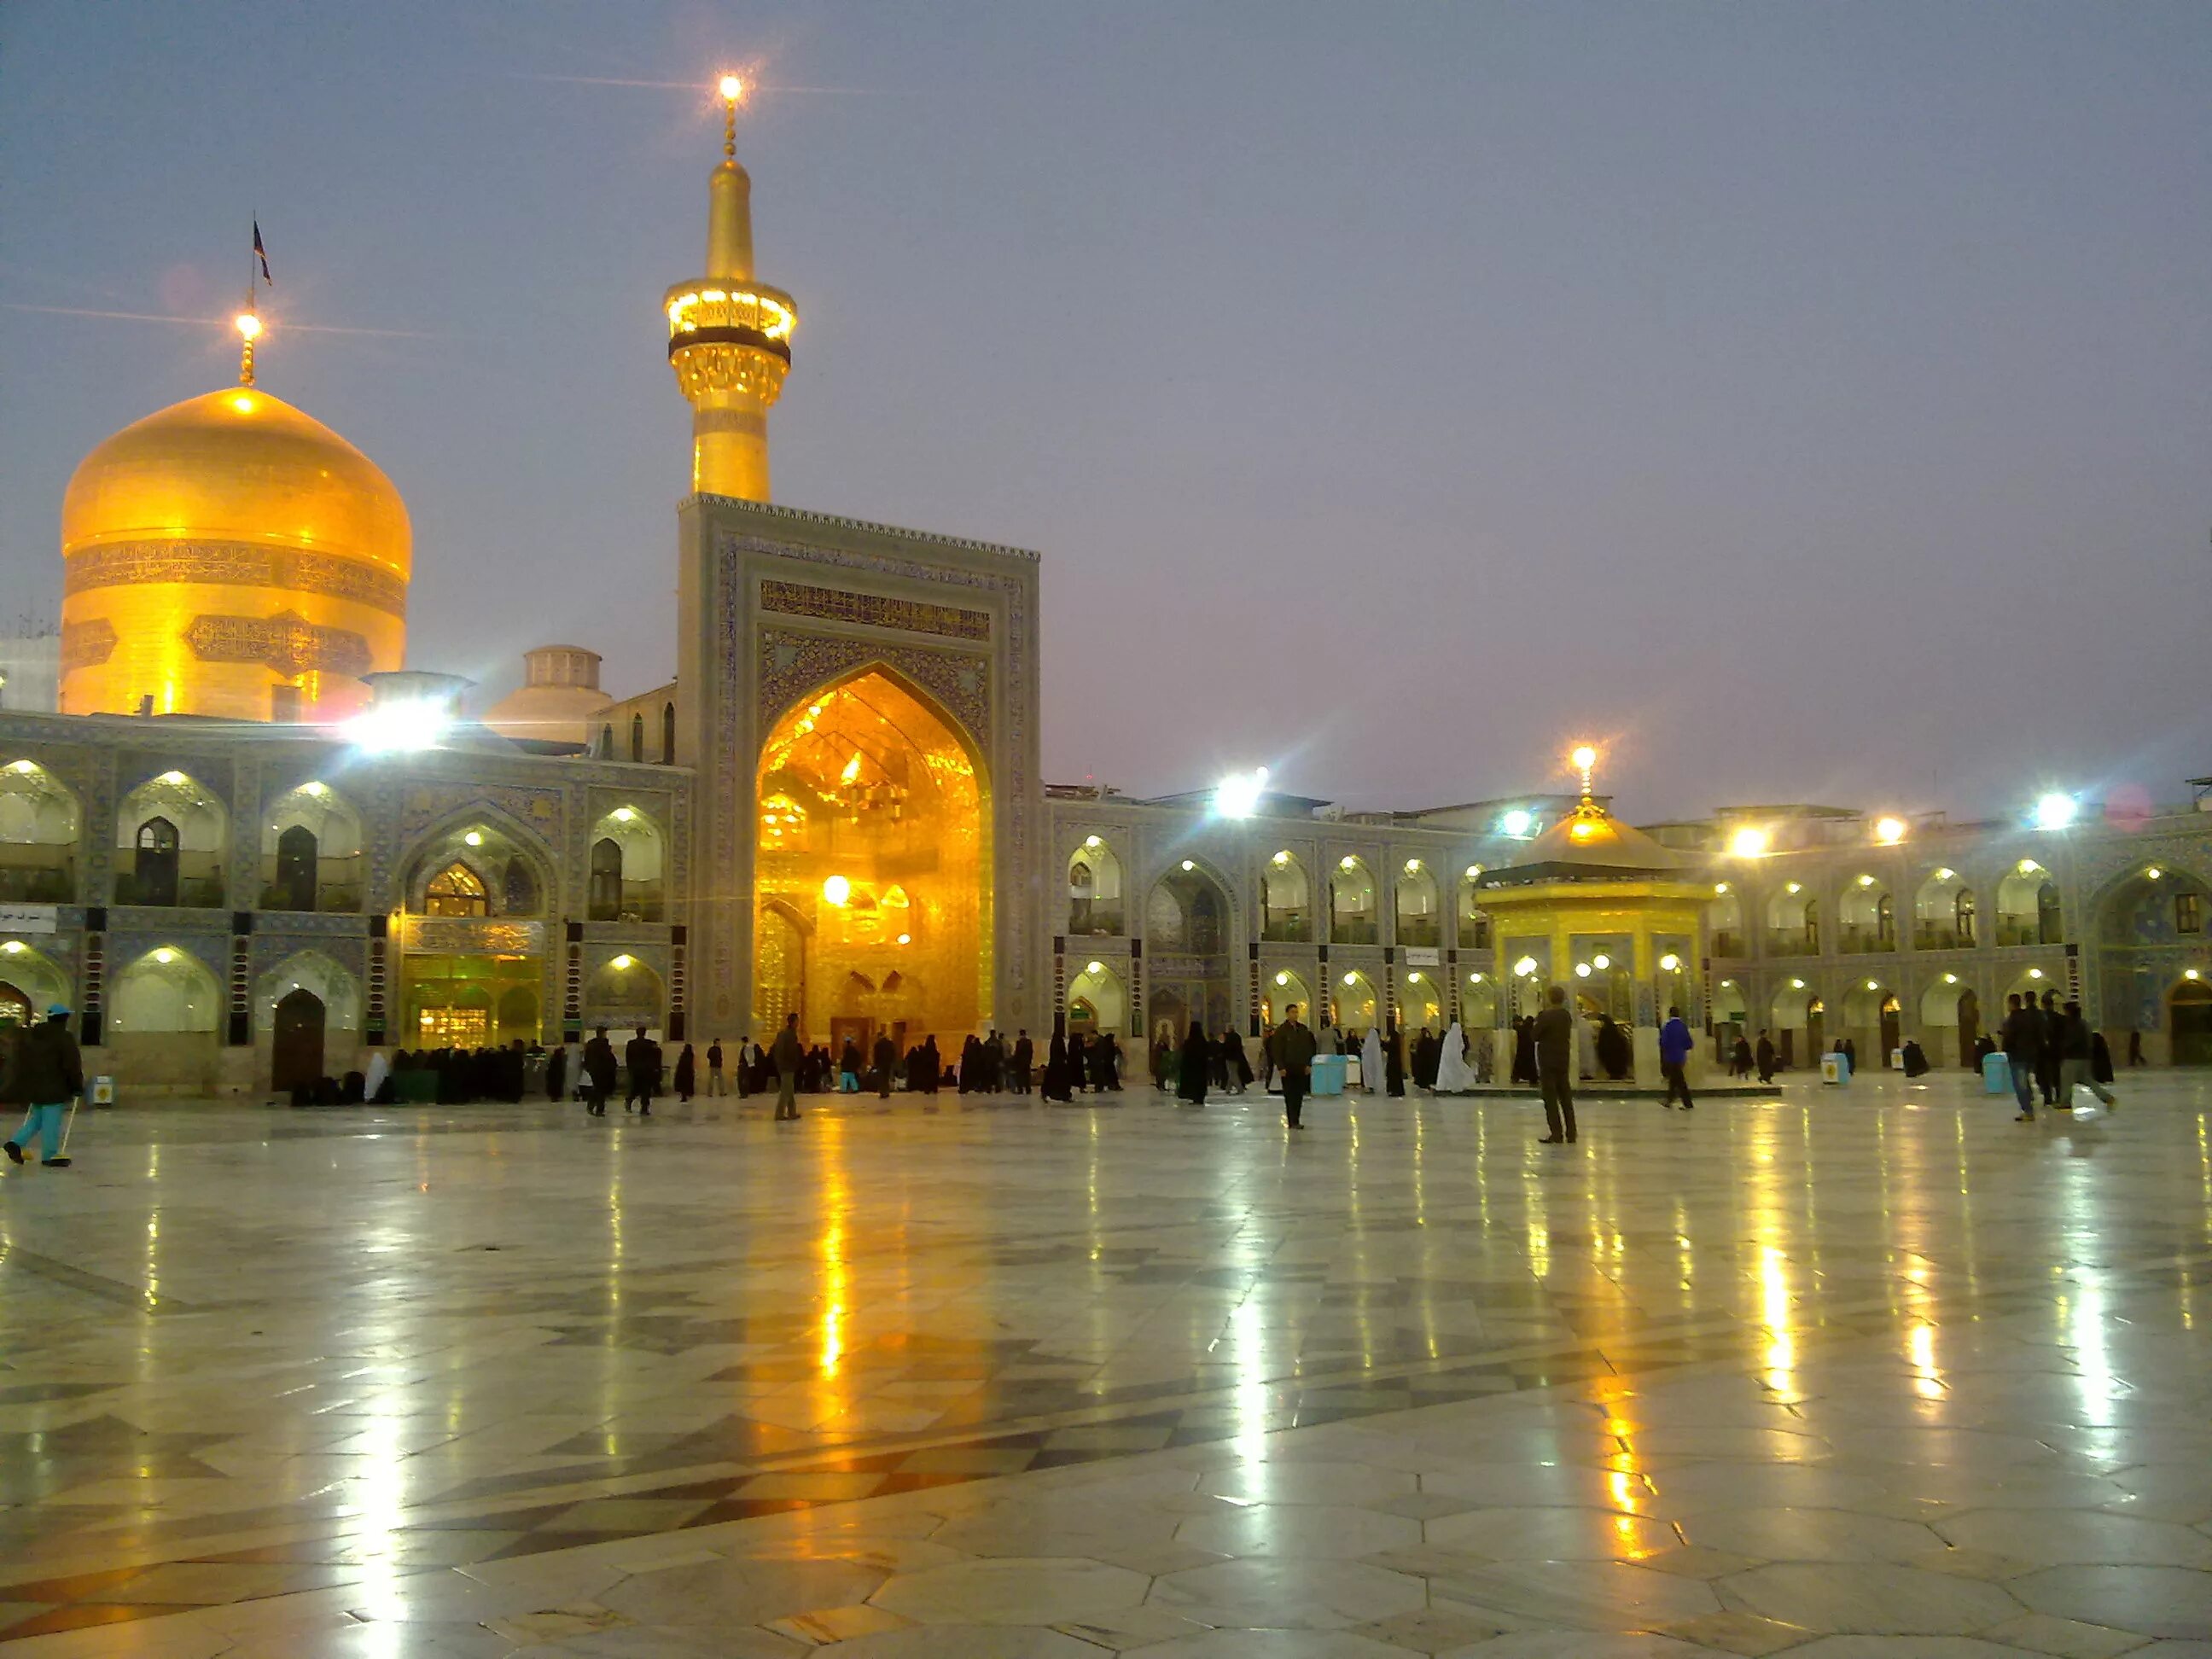 Имама реза. Мавзолей имама резы Мешхед. Иран мечеть Мешхед. Мазар имама резы (Мешхед, Иран). Мечеть Гохаршад Мешхед.